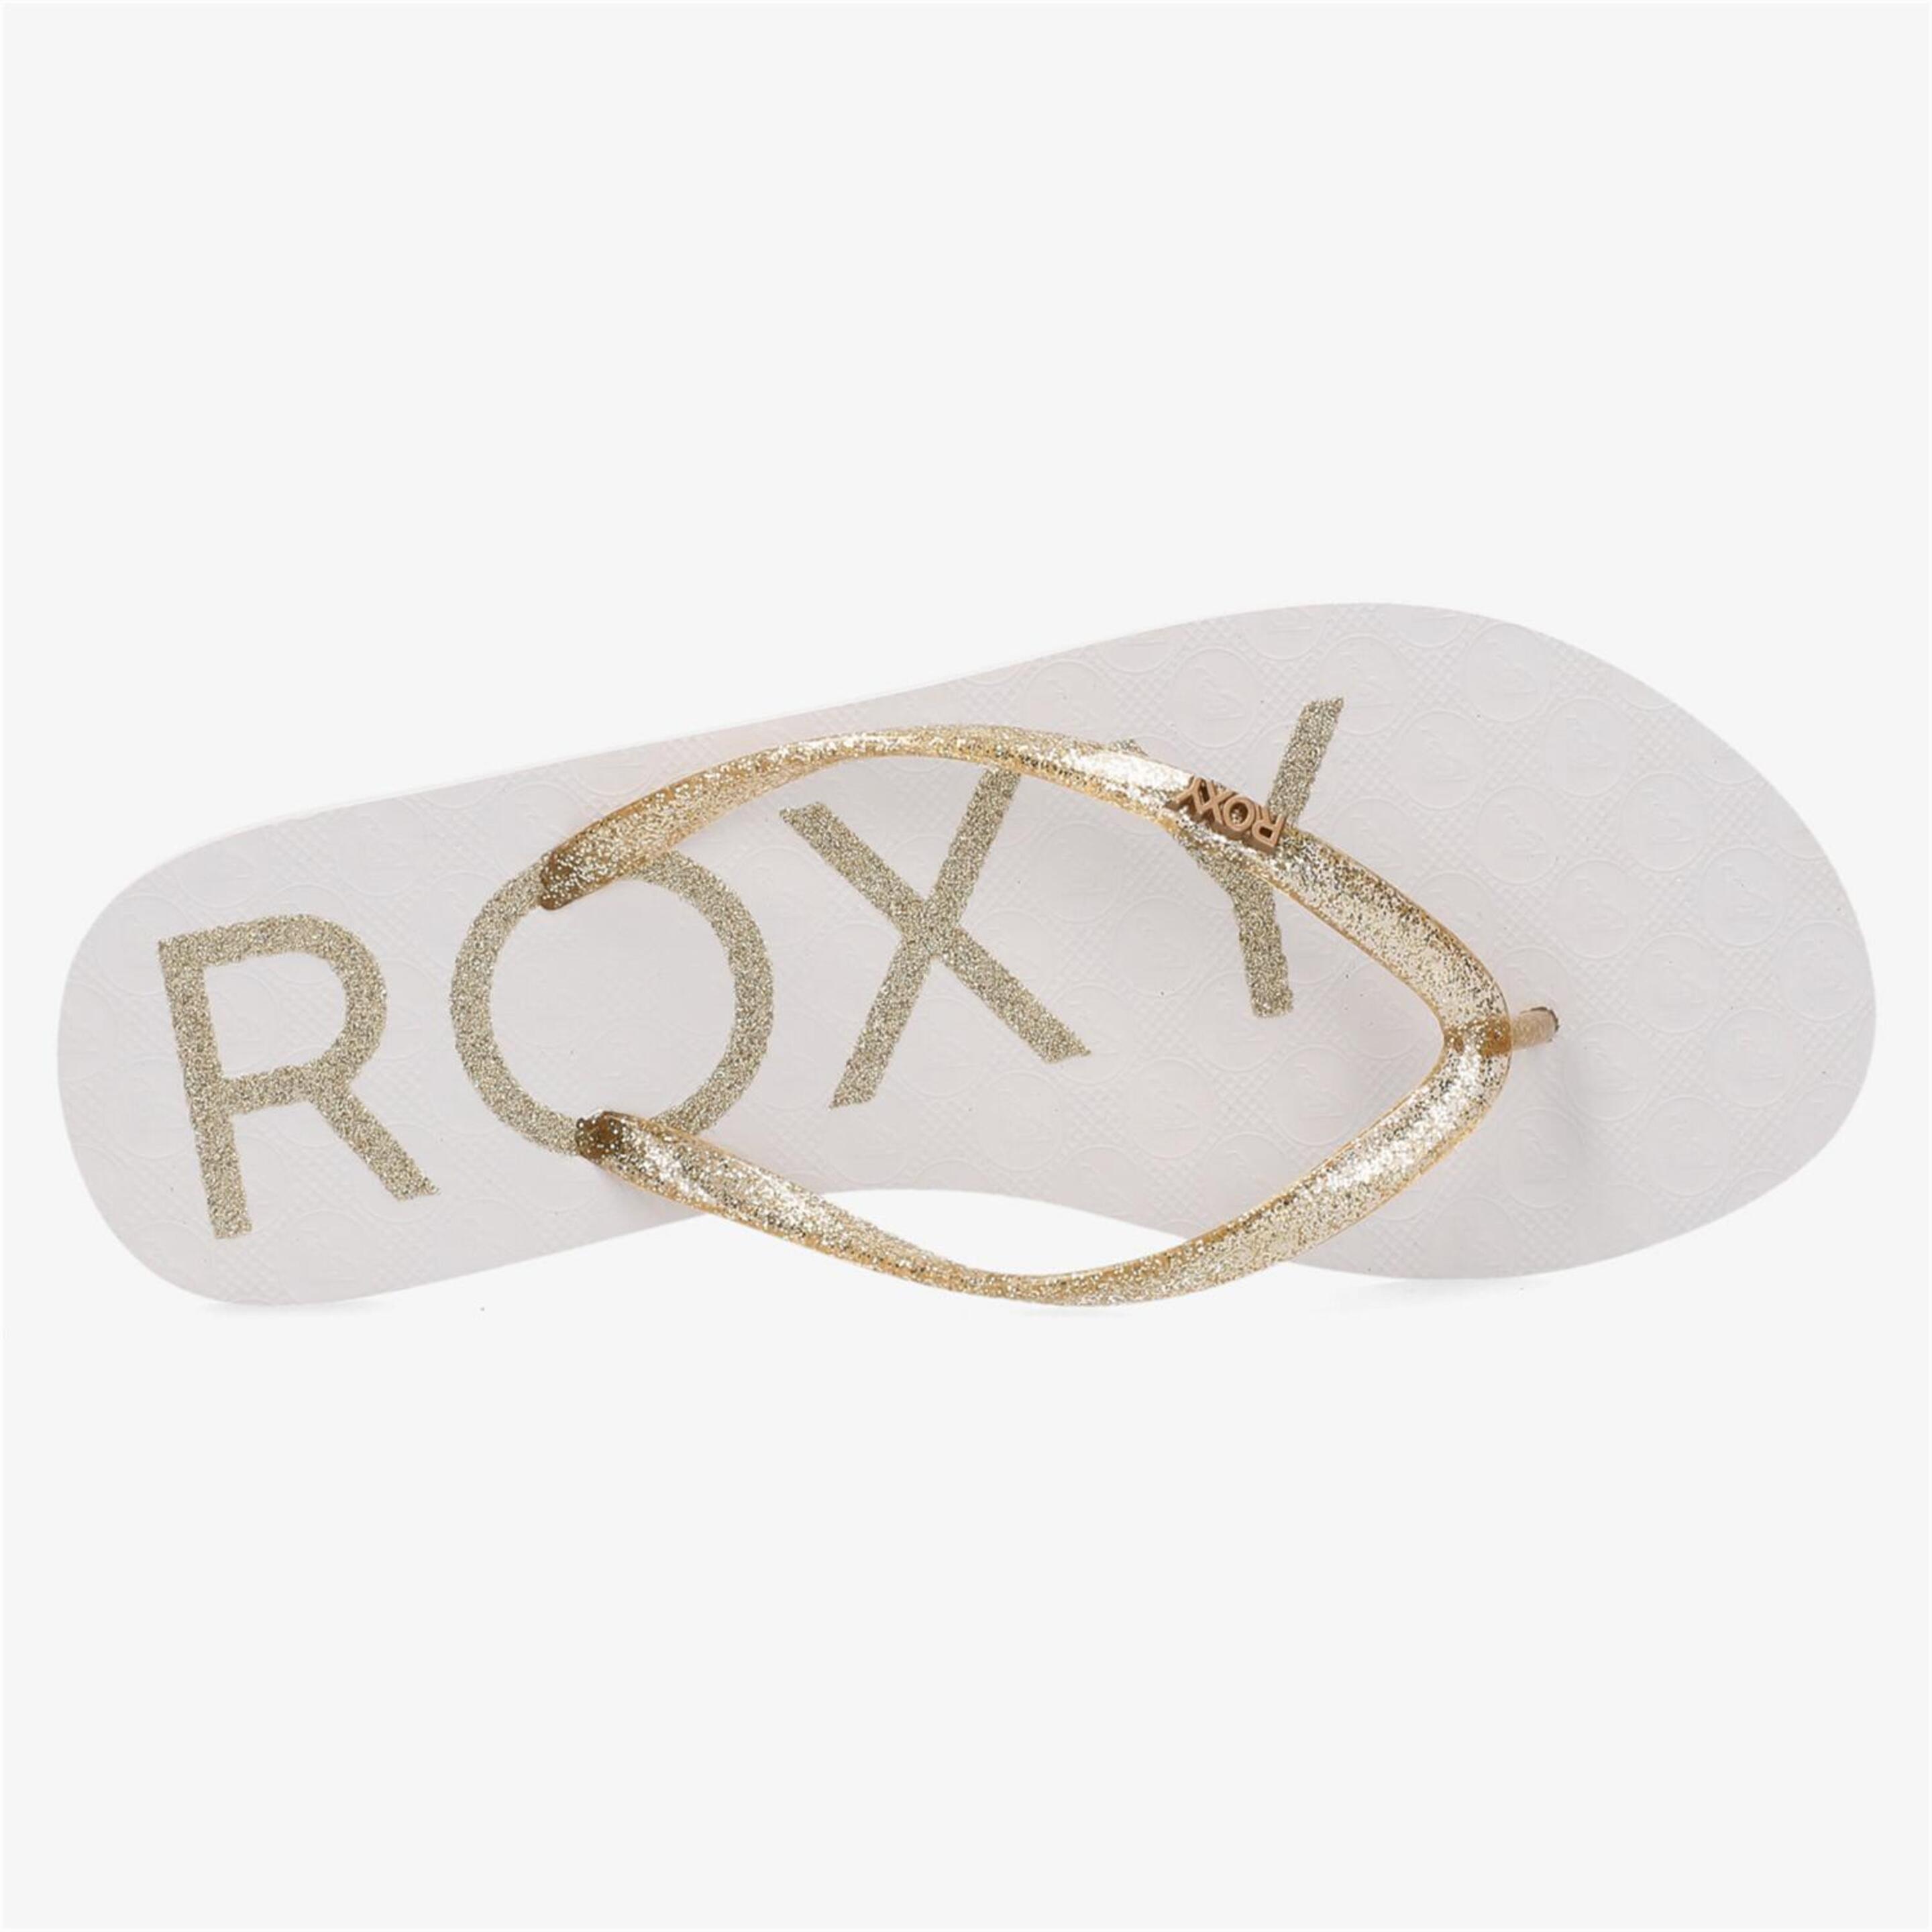 Roxy Viva - Blanco - Chanclas Mujer